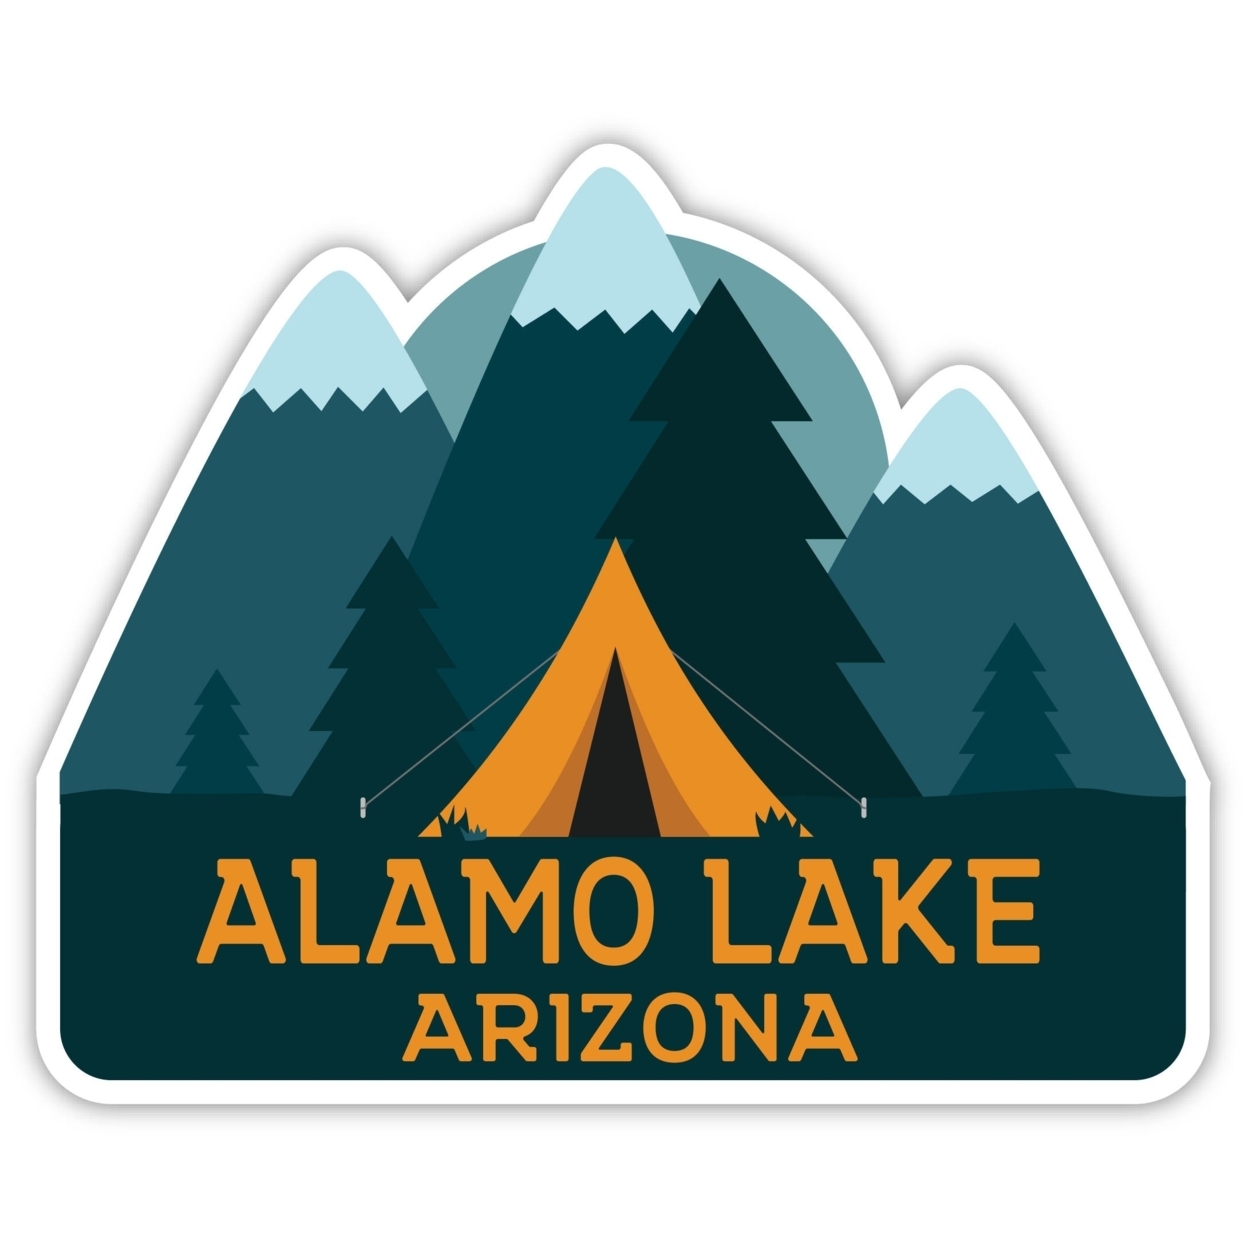 Alamo Lake Arizona Souvenir Decorative Stickers (Choose Theme And Size) - 4-Pack, 4-Inch, Tent